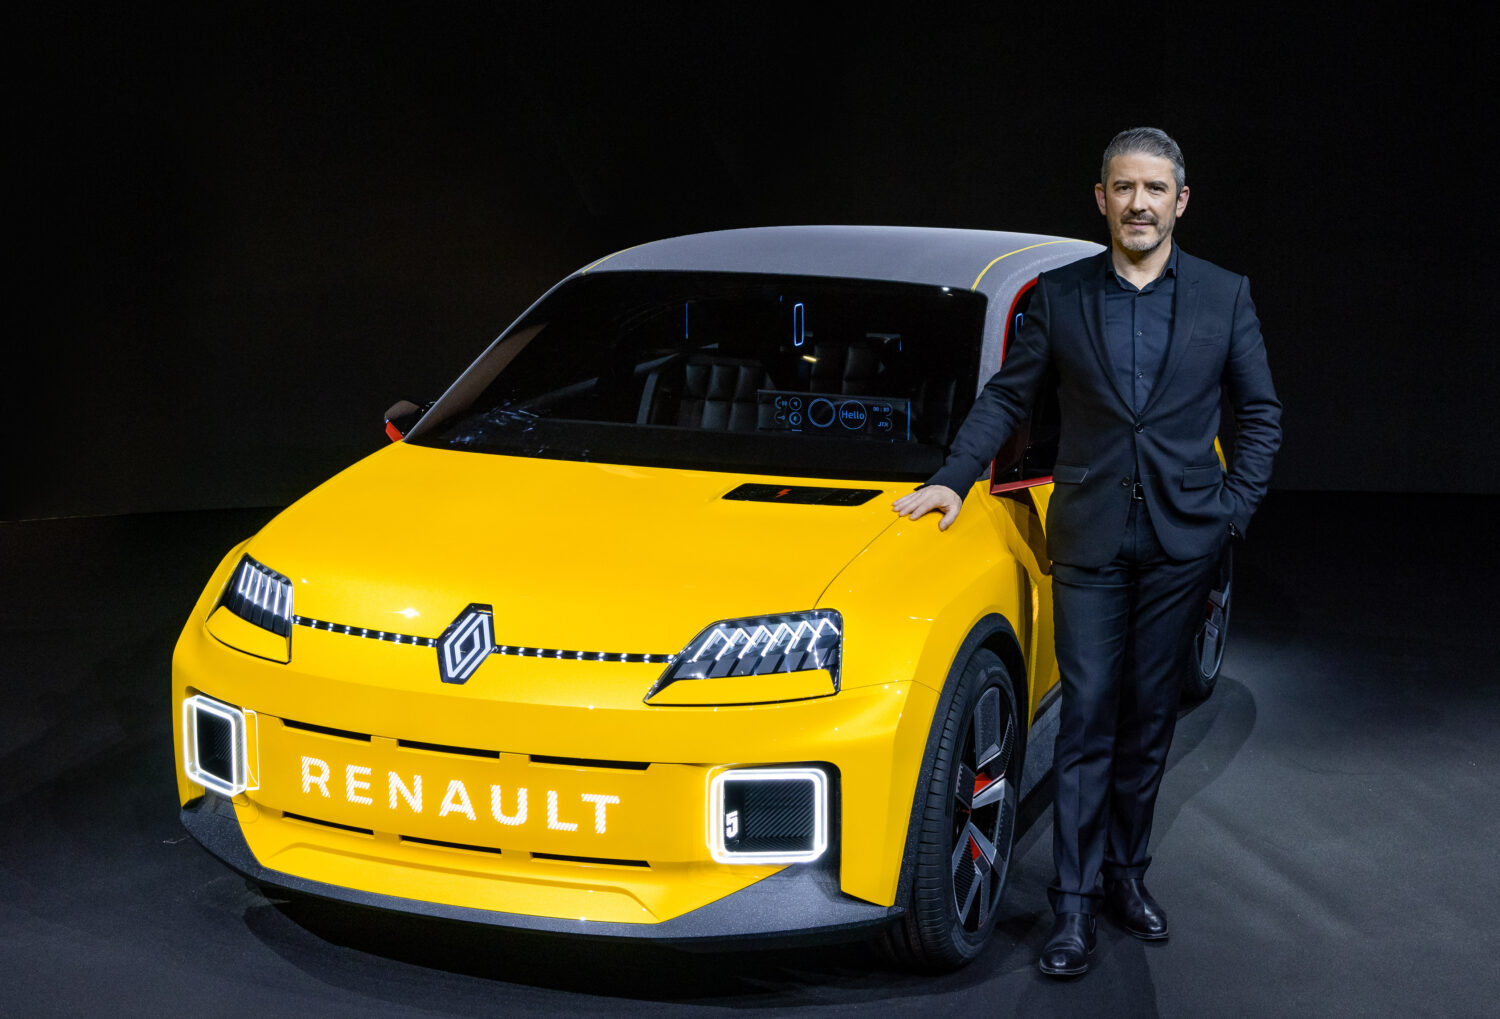 2021 - Renault 5 Prototype and Gilles VIDAL, designer